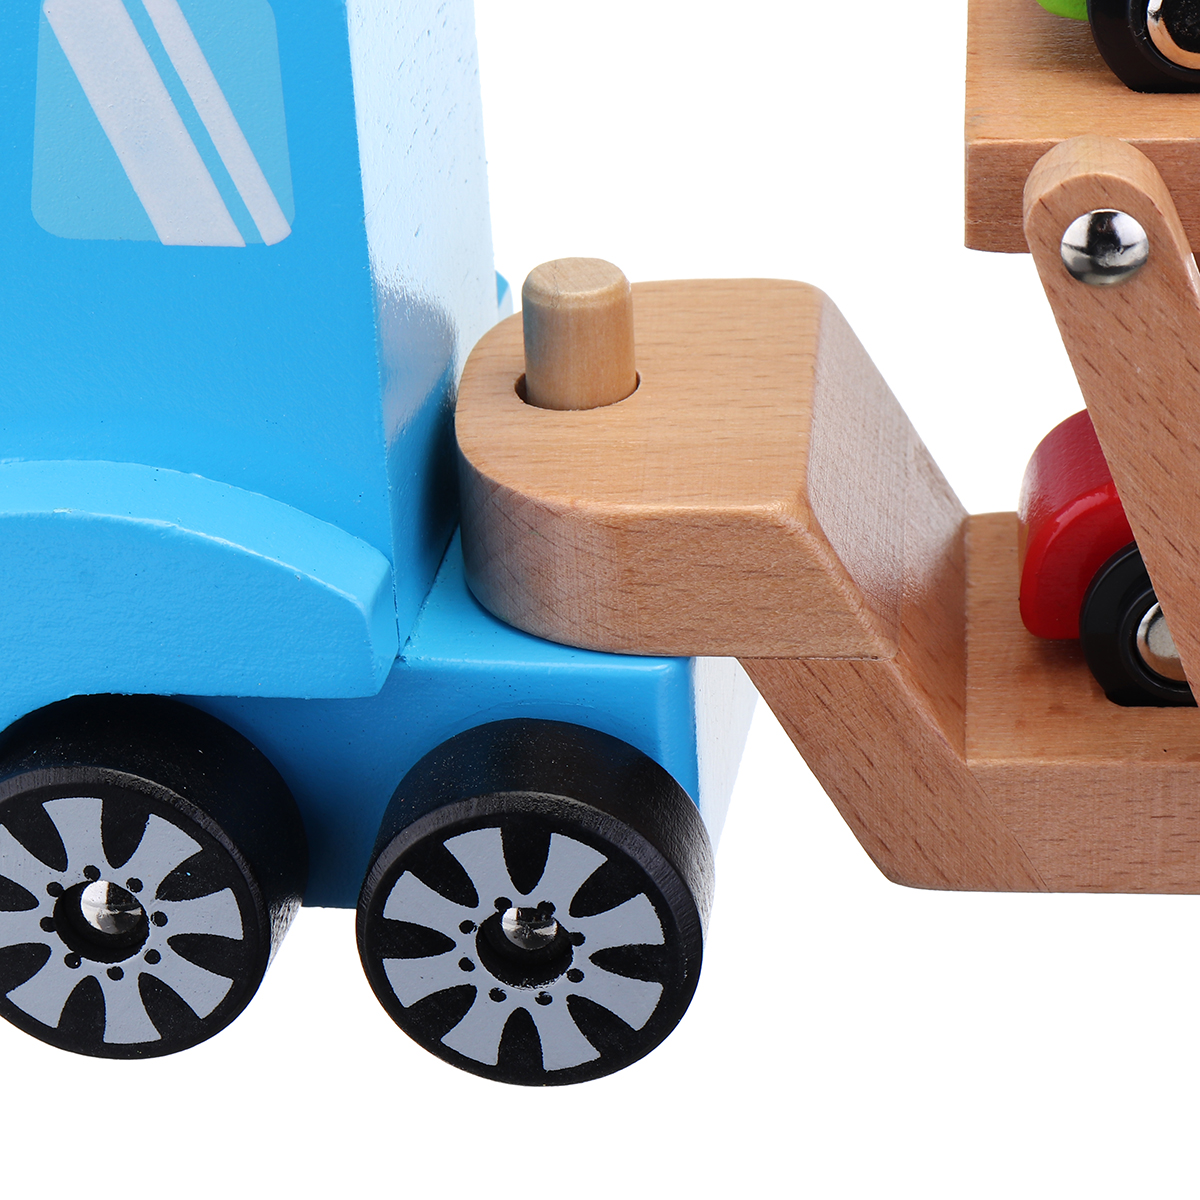 Beva-5-In-1-Truck-Model-Toy-Environmental-Wooden-Car-Load-Vehicle-Kid-Developmental-Toys-from-Xiaomi-1418866-12